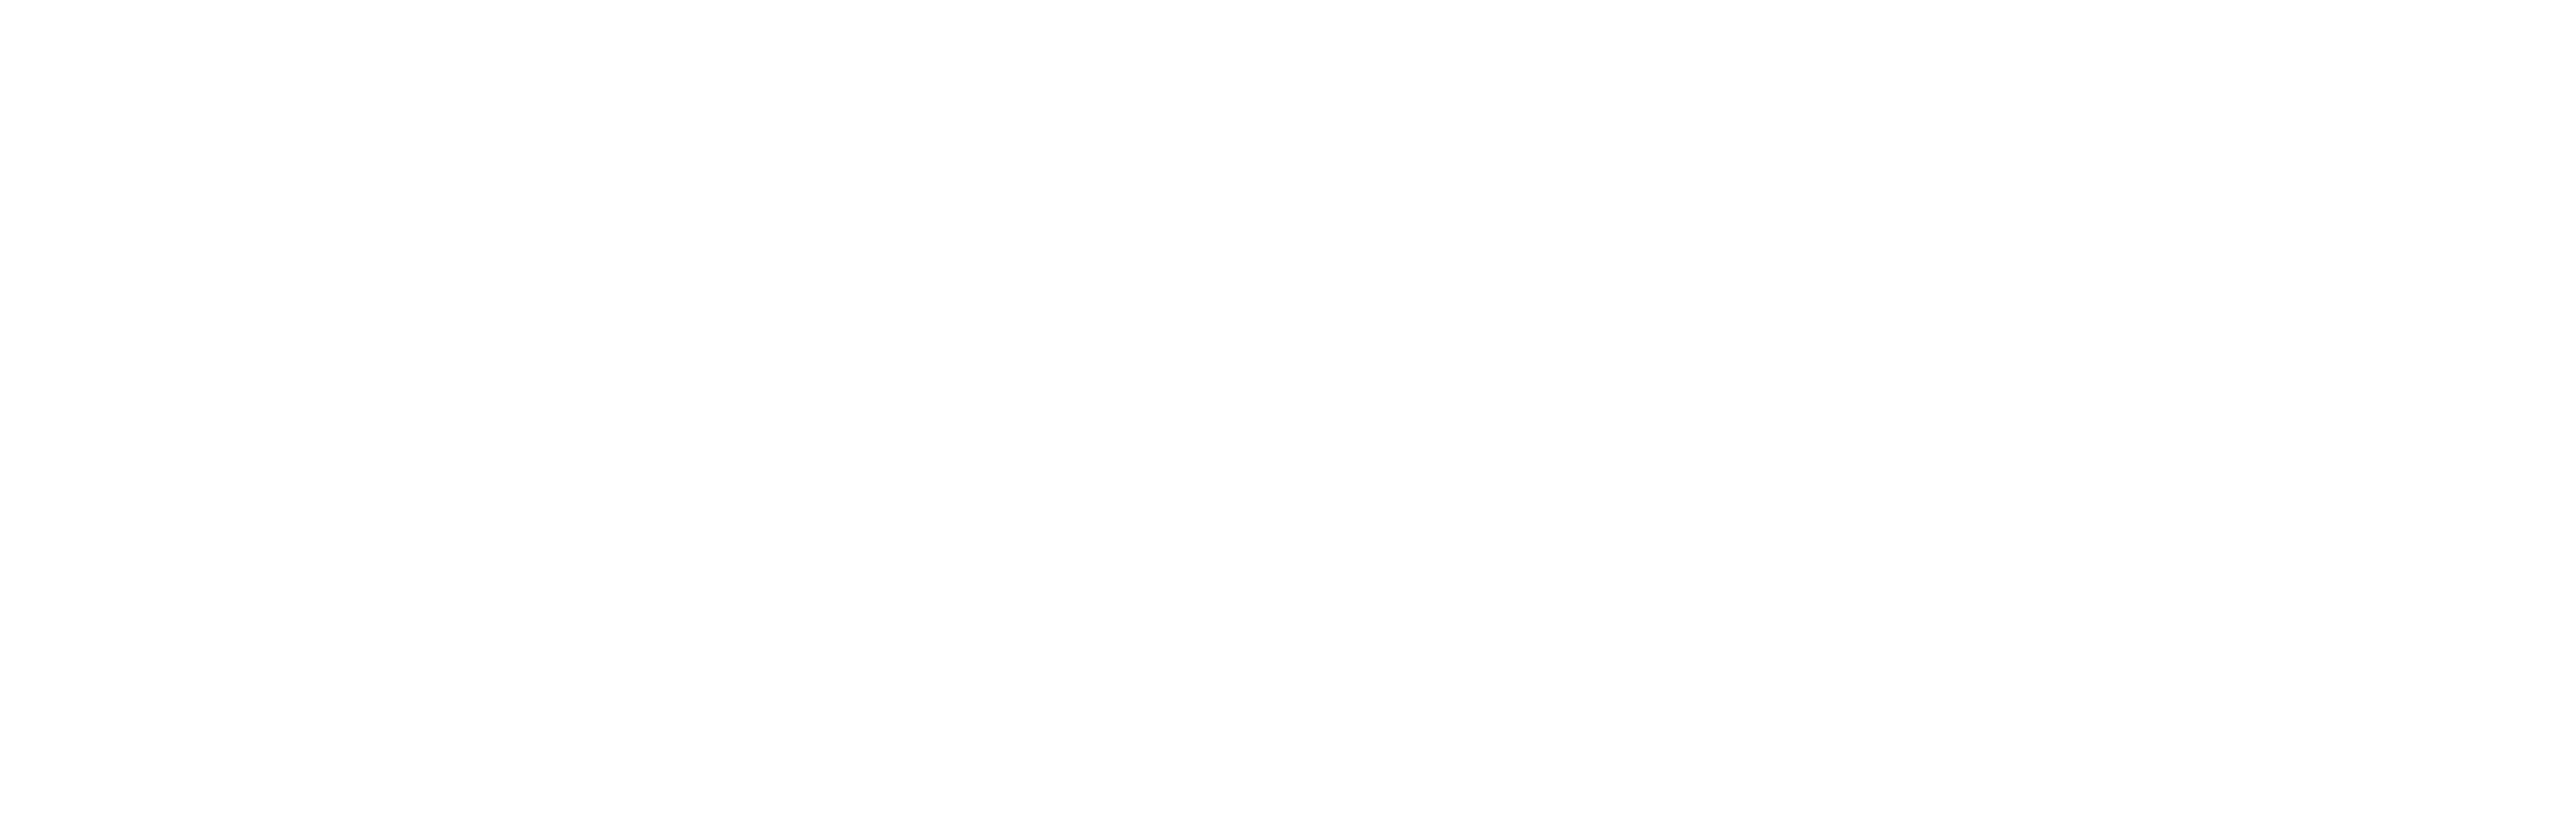 cre8tivebot-logo-white